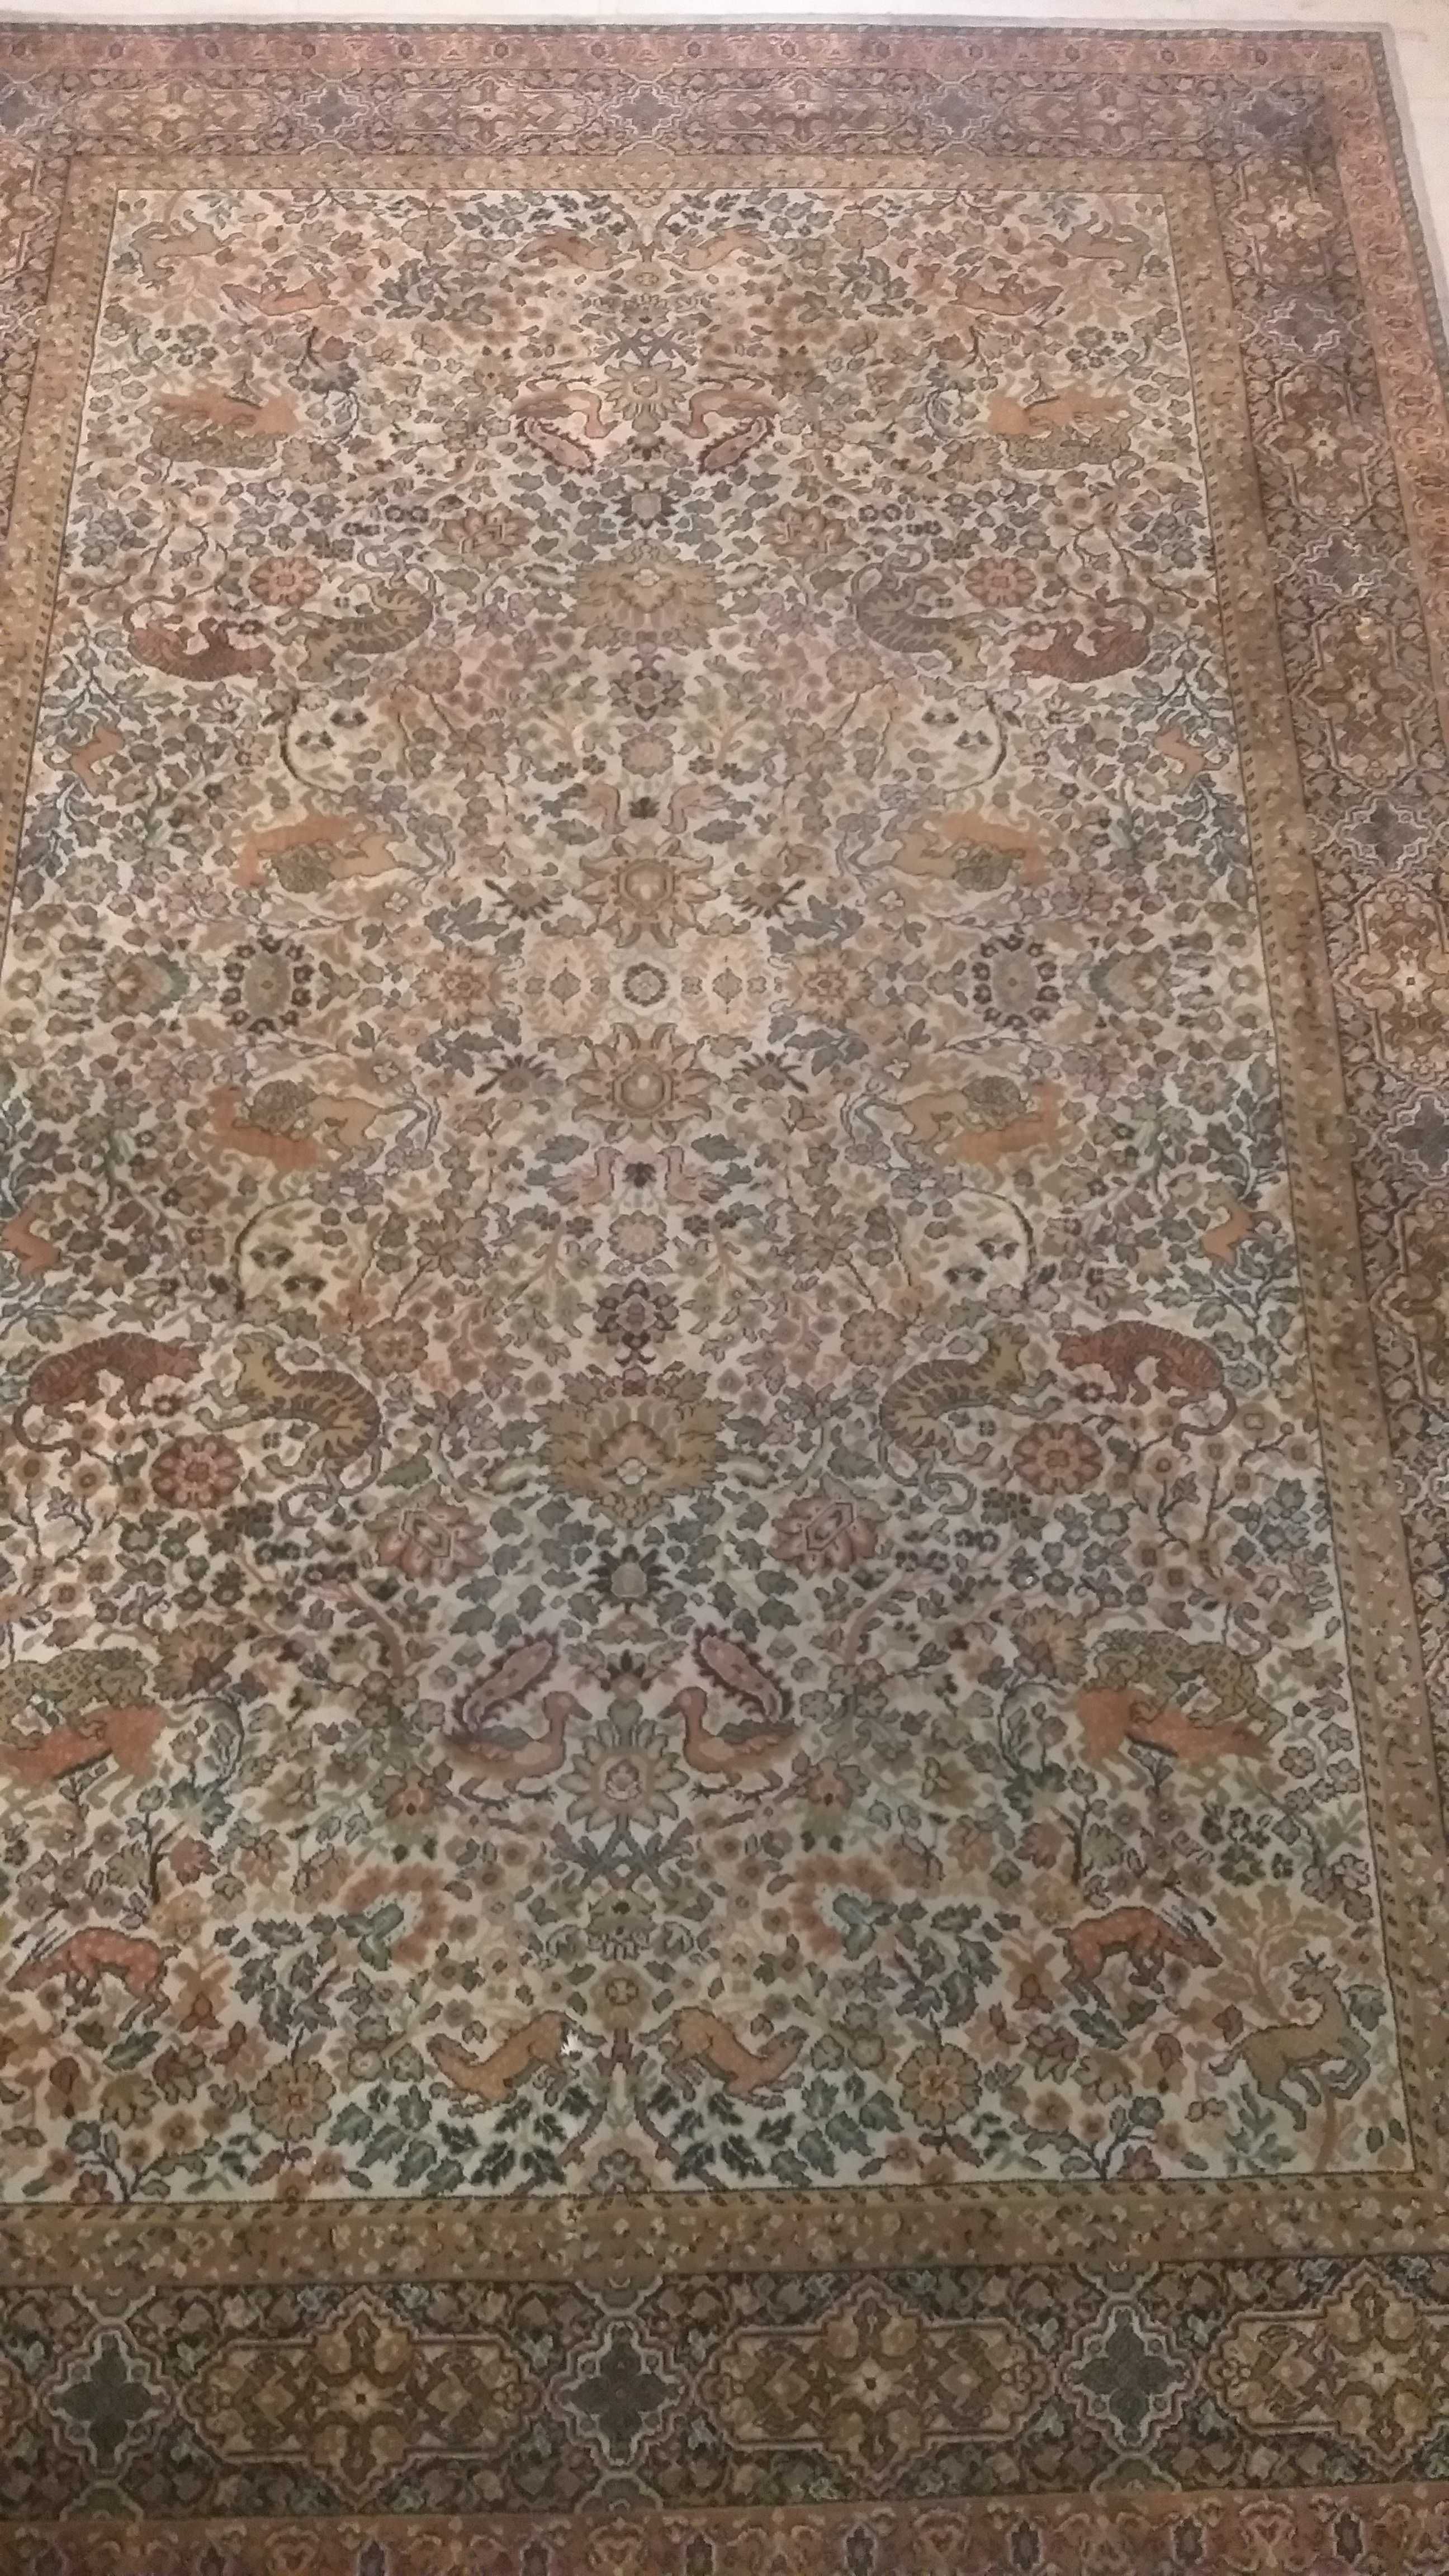 2 Carpetes sala da  Cuf têxteis 3x2.5